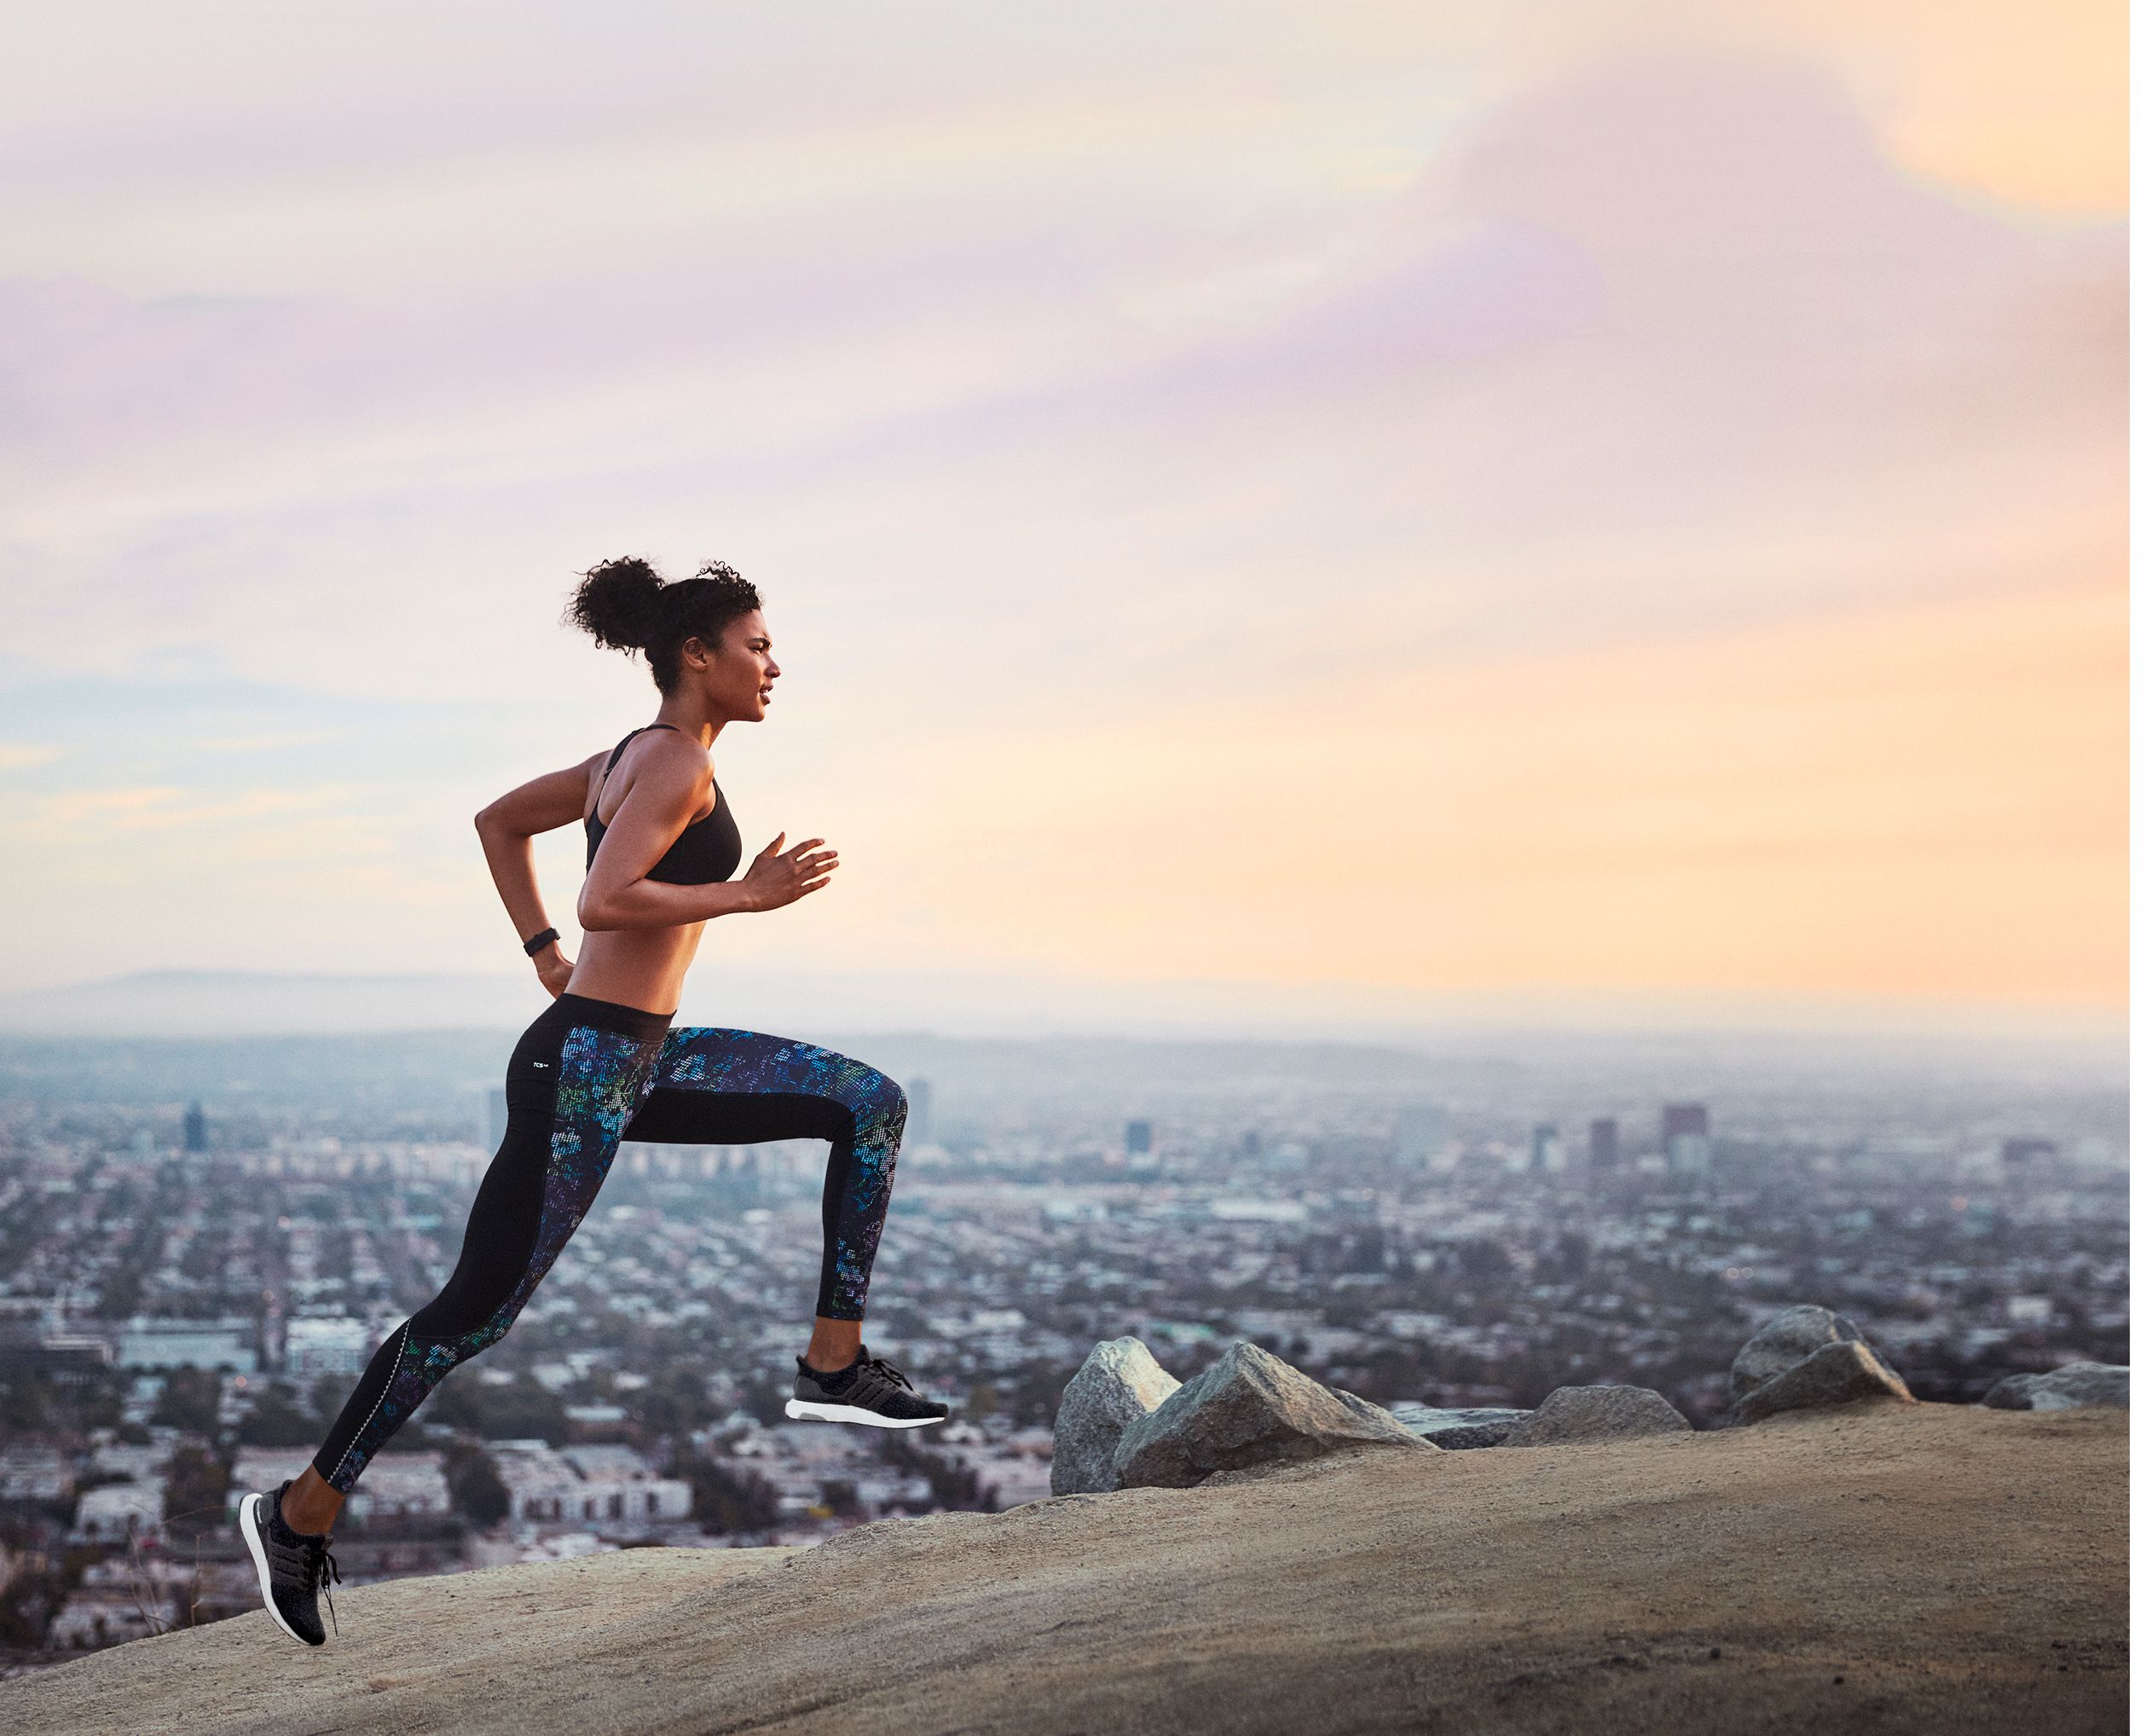 This Runner Makes Activewear That Empowers Women - Women's Running